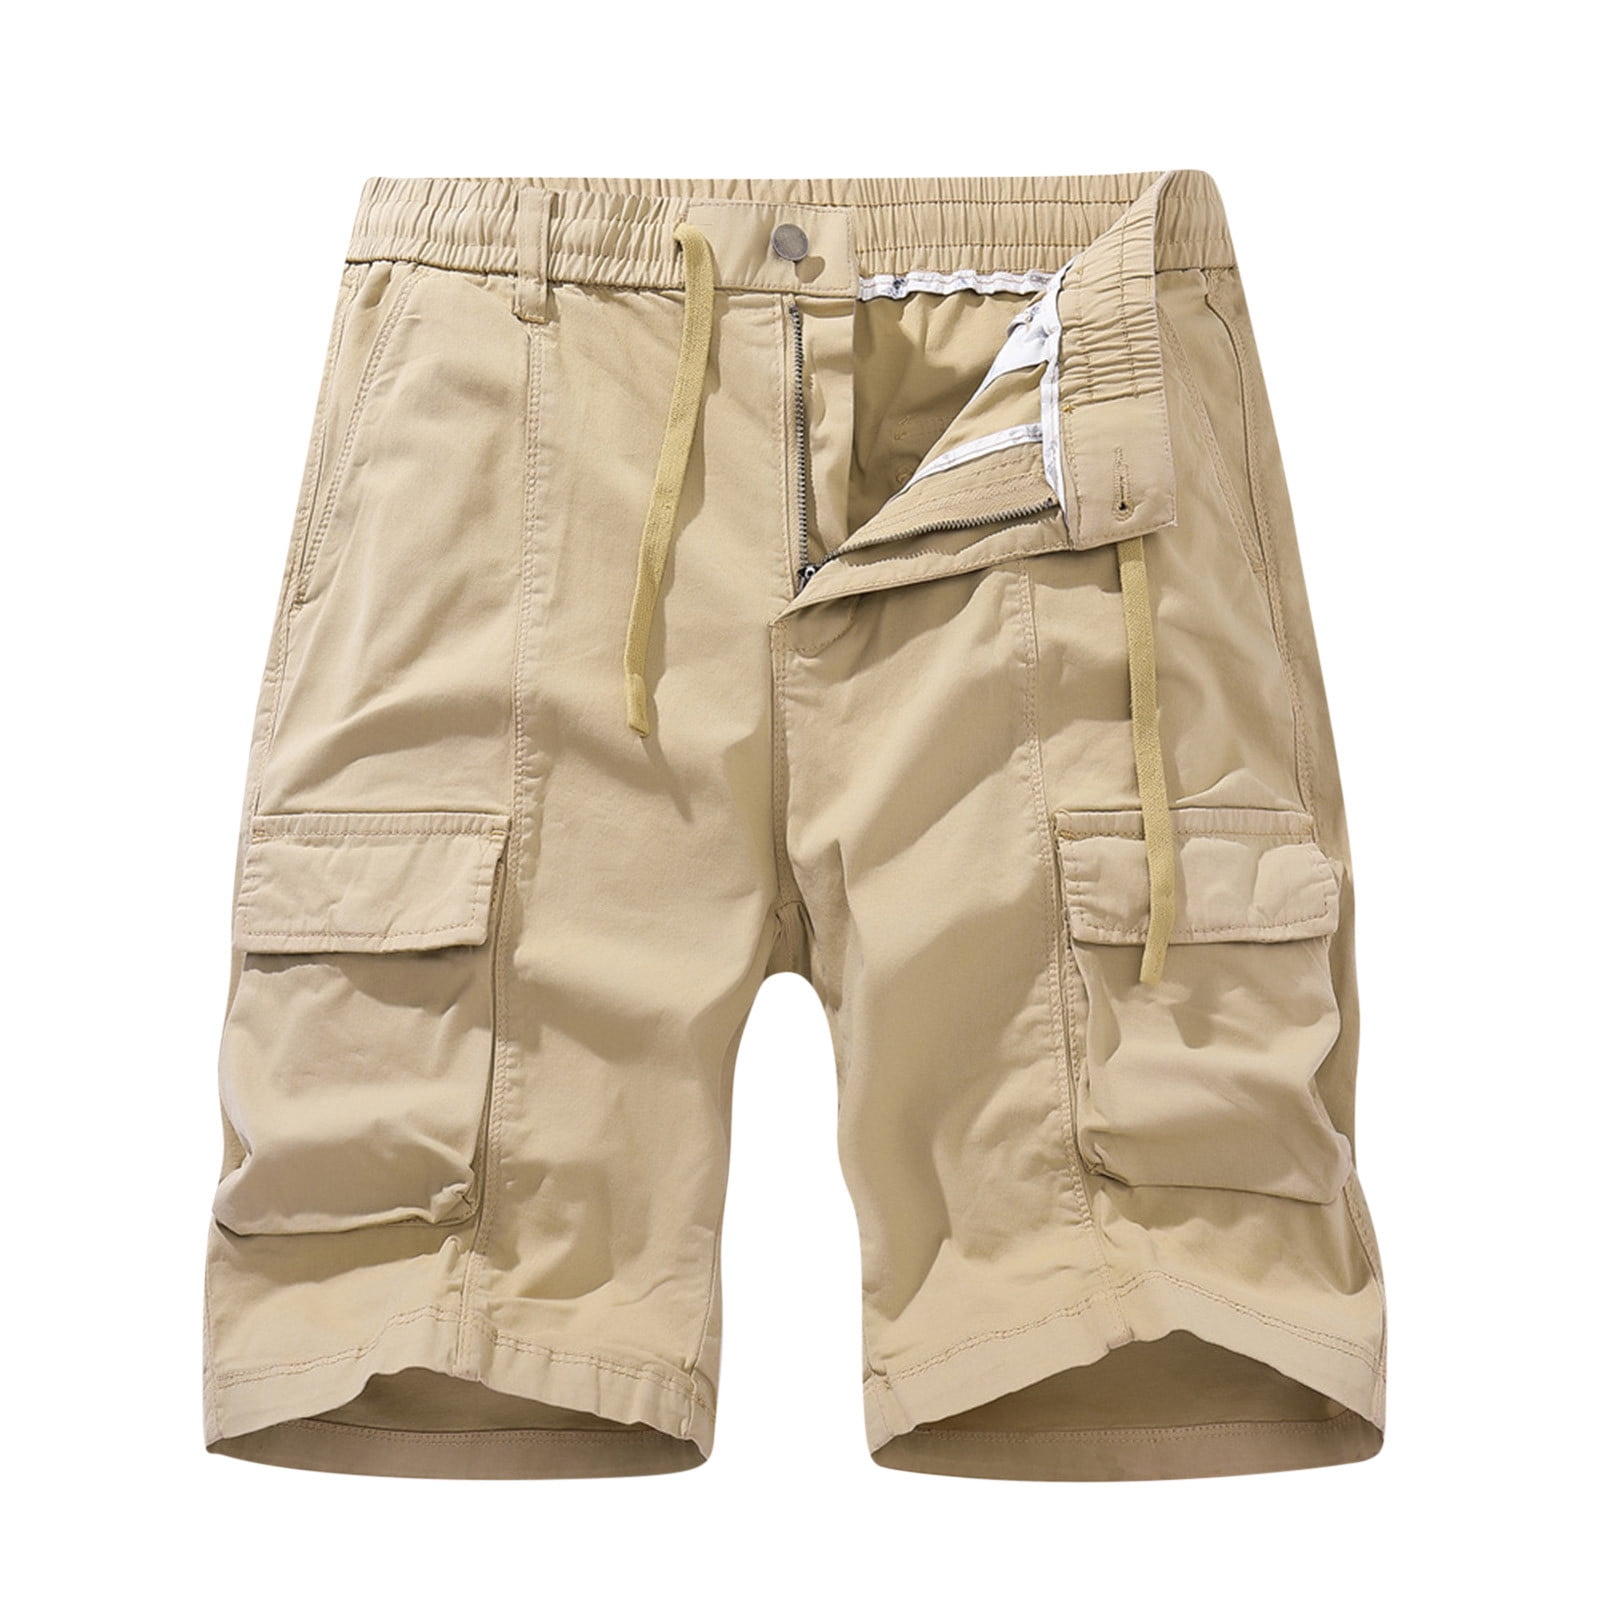 Frontwalk Men Cargo Shorts Summer Drawstring Short Pants Outdoor Fishing  Shorts Camping Travel Shorts with Pockets Beige XL